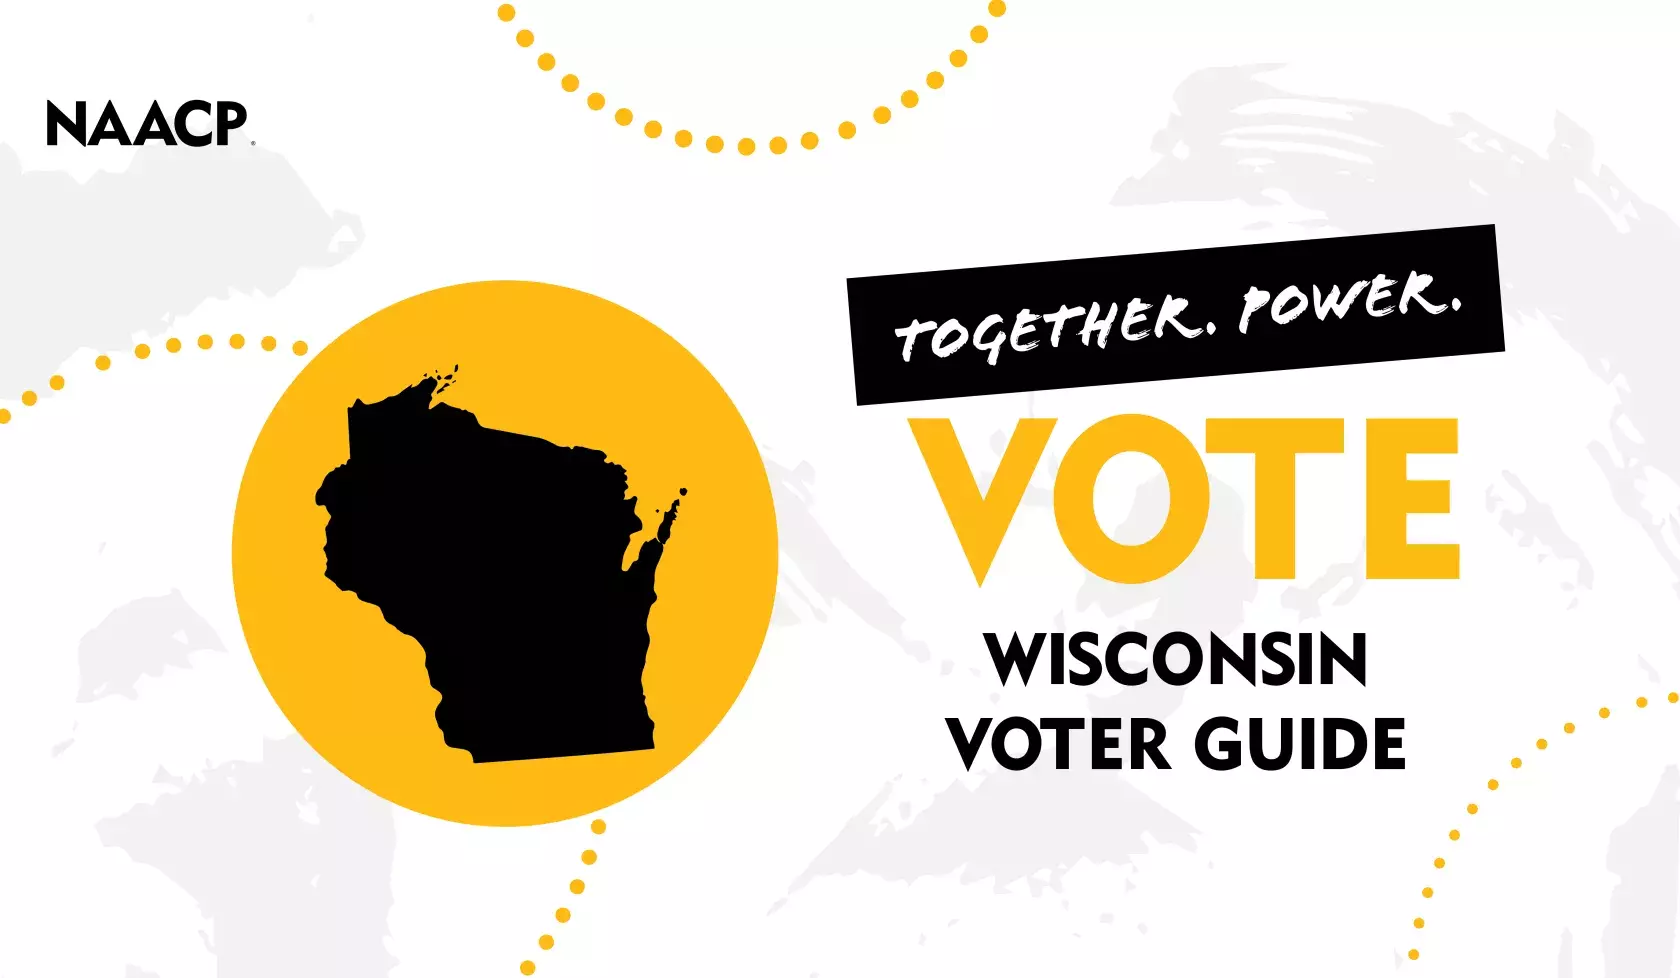 Wisconsin Voter Guide